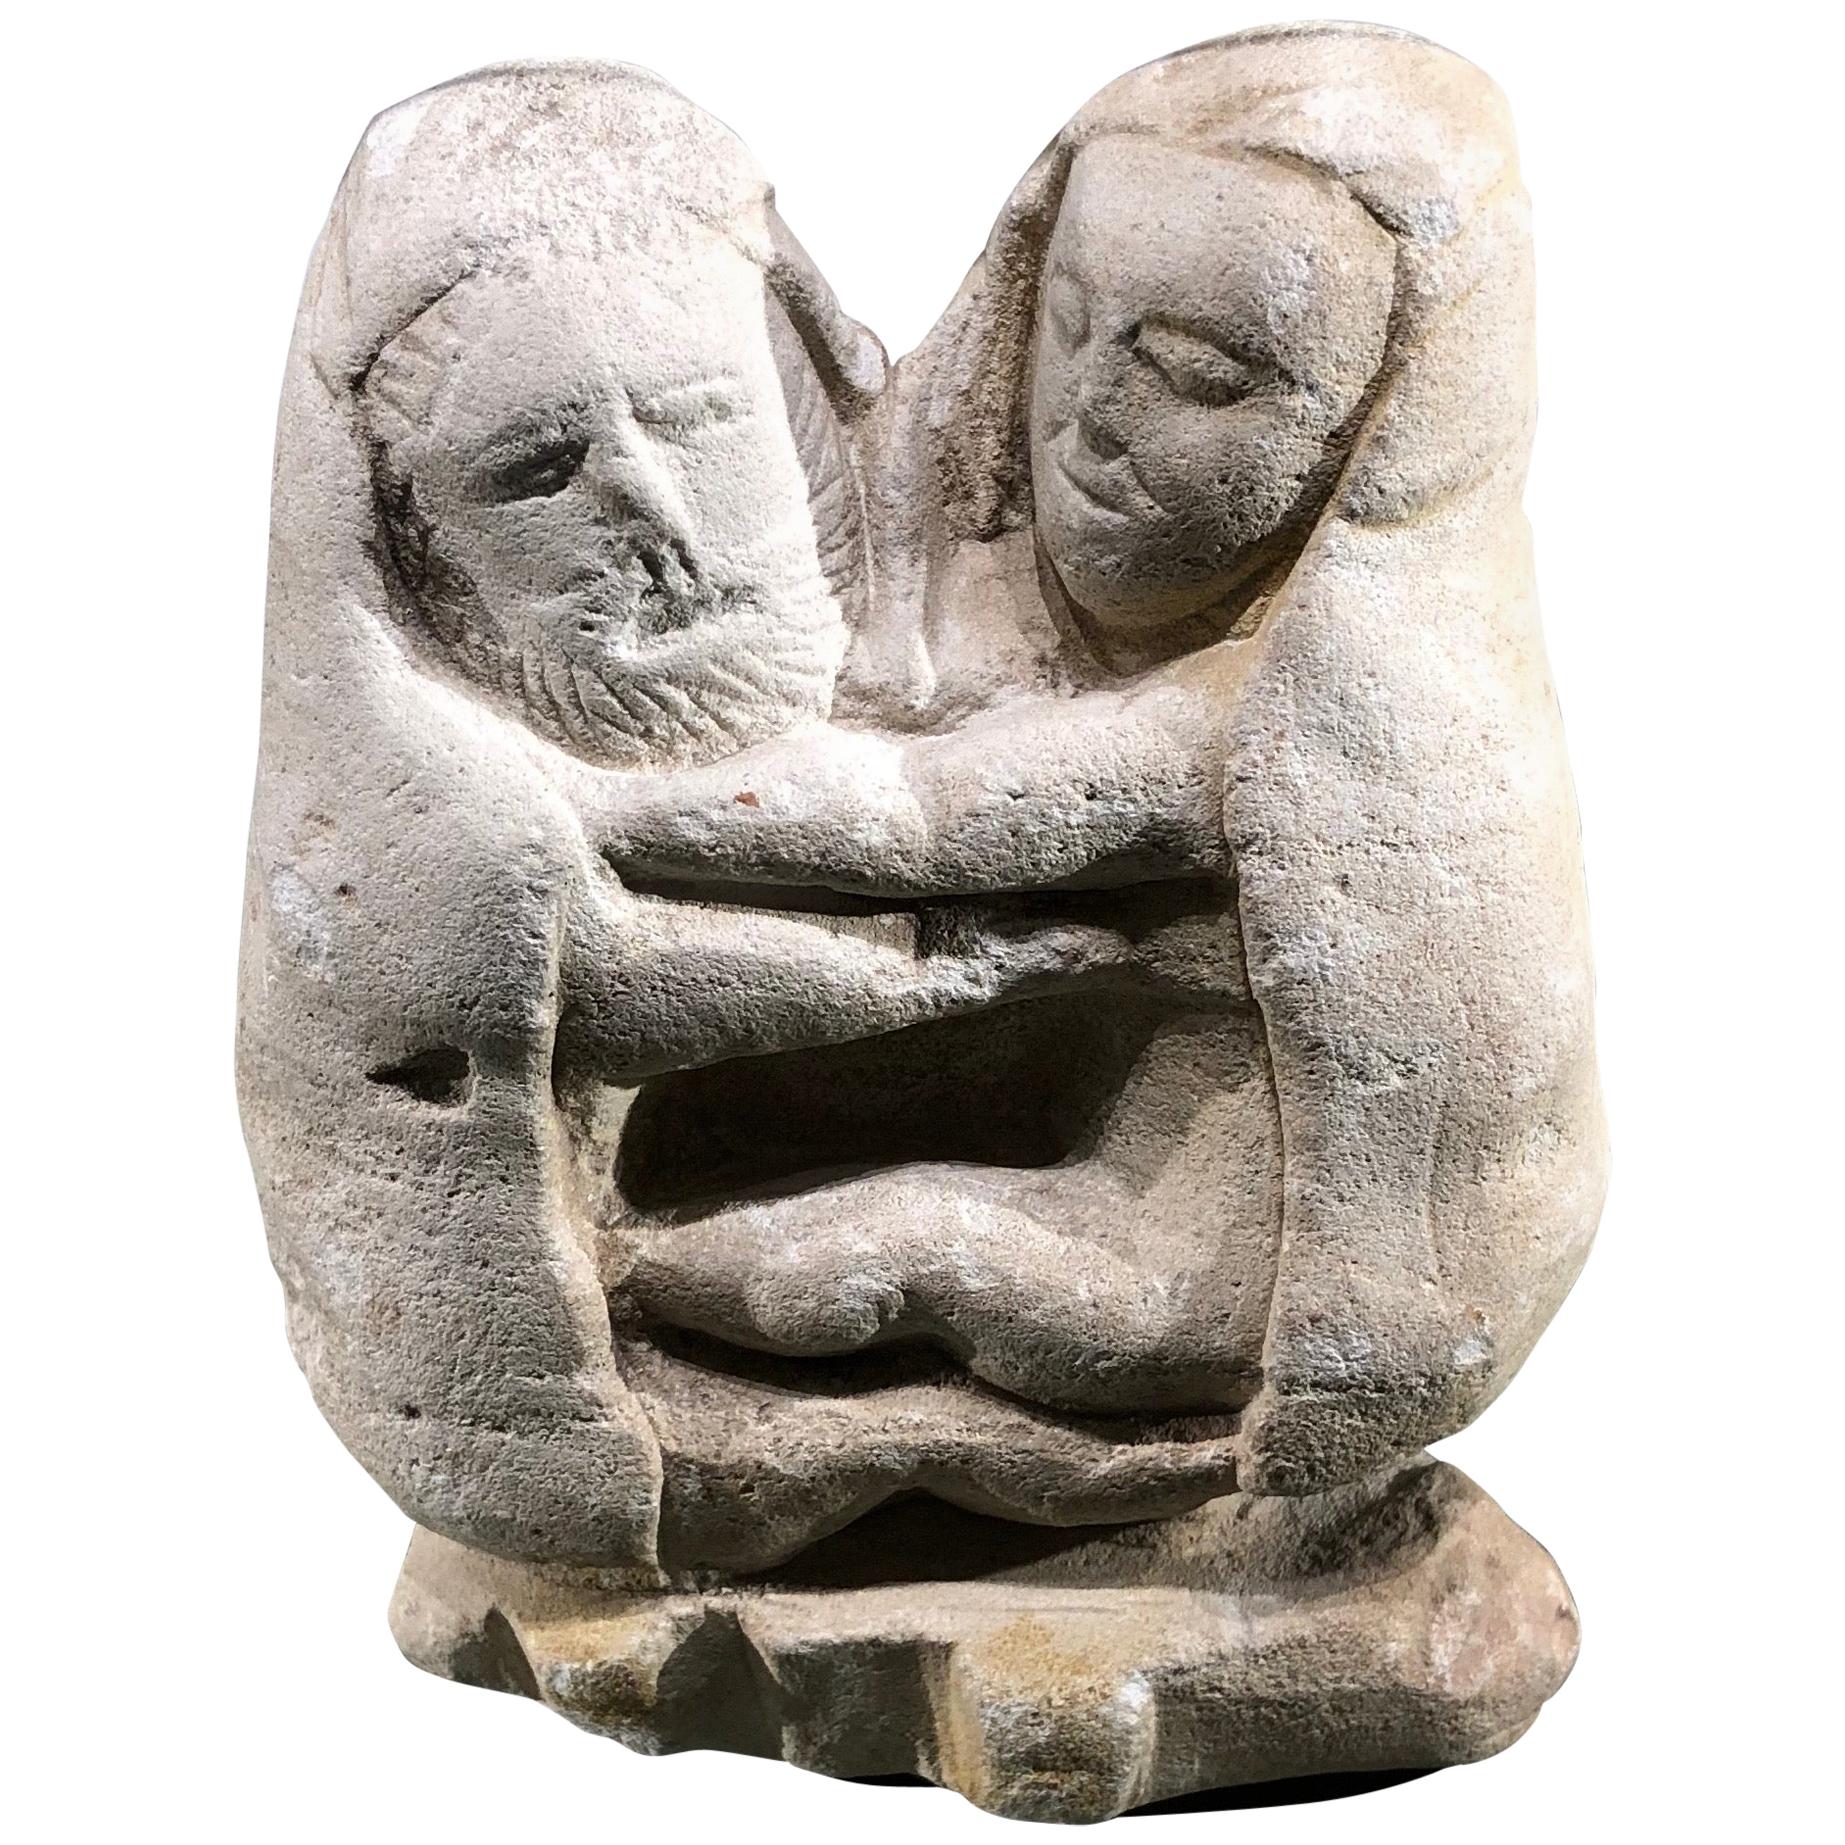 Greek archaic limestone sculpture representing "Zeus's wedding"